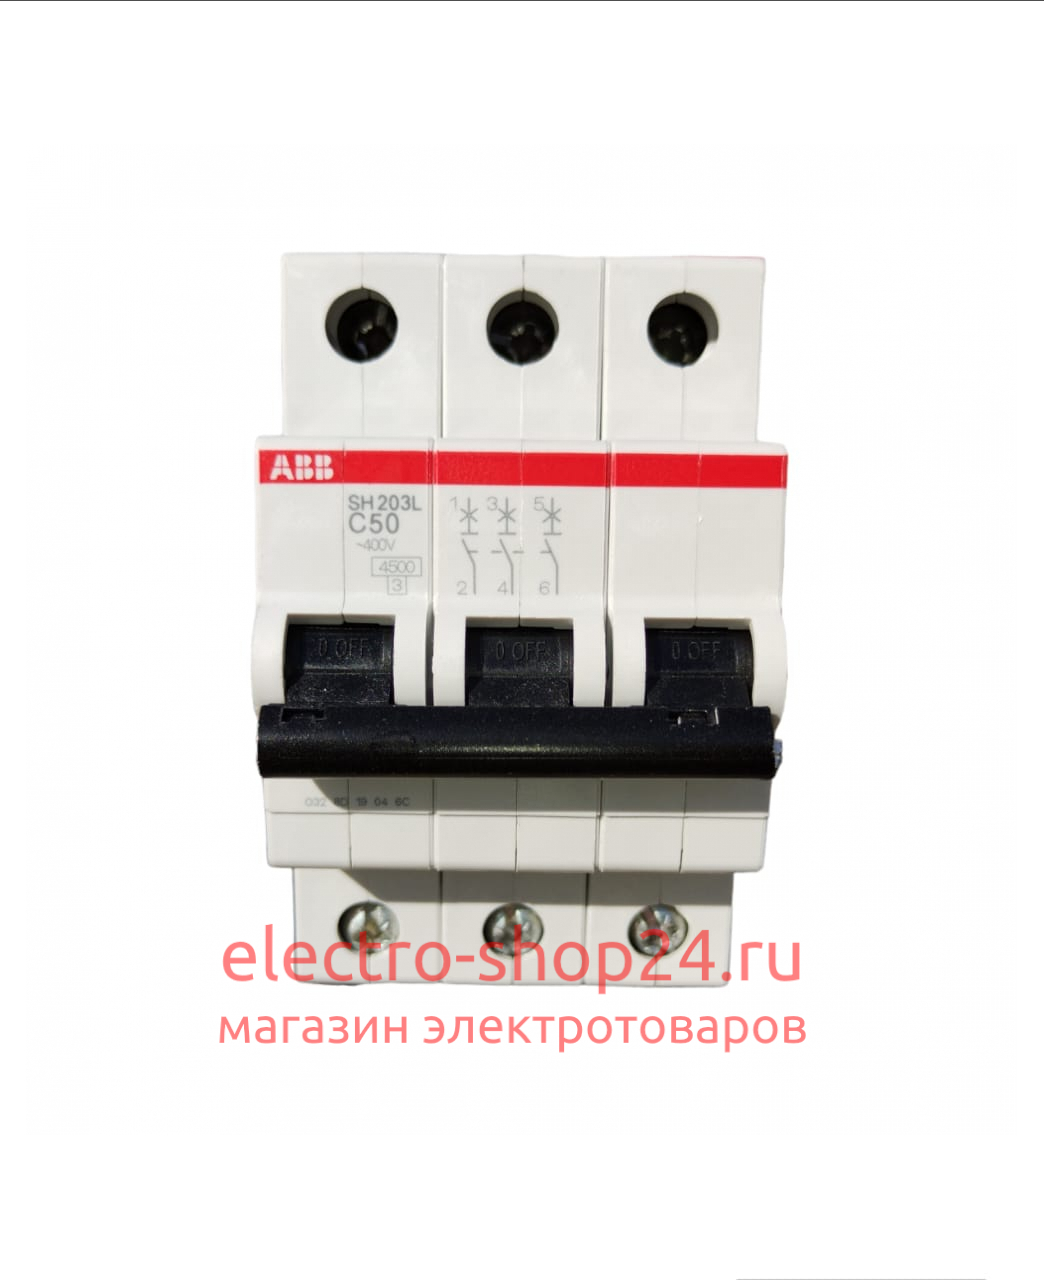 SH203L C50 Автоматический выключатель 3-полюсный 50А 4,5кА (хар-ка C) ABB 2CDS243001R0504 2CDS243001R0504 - магазин электротехники Electroshop